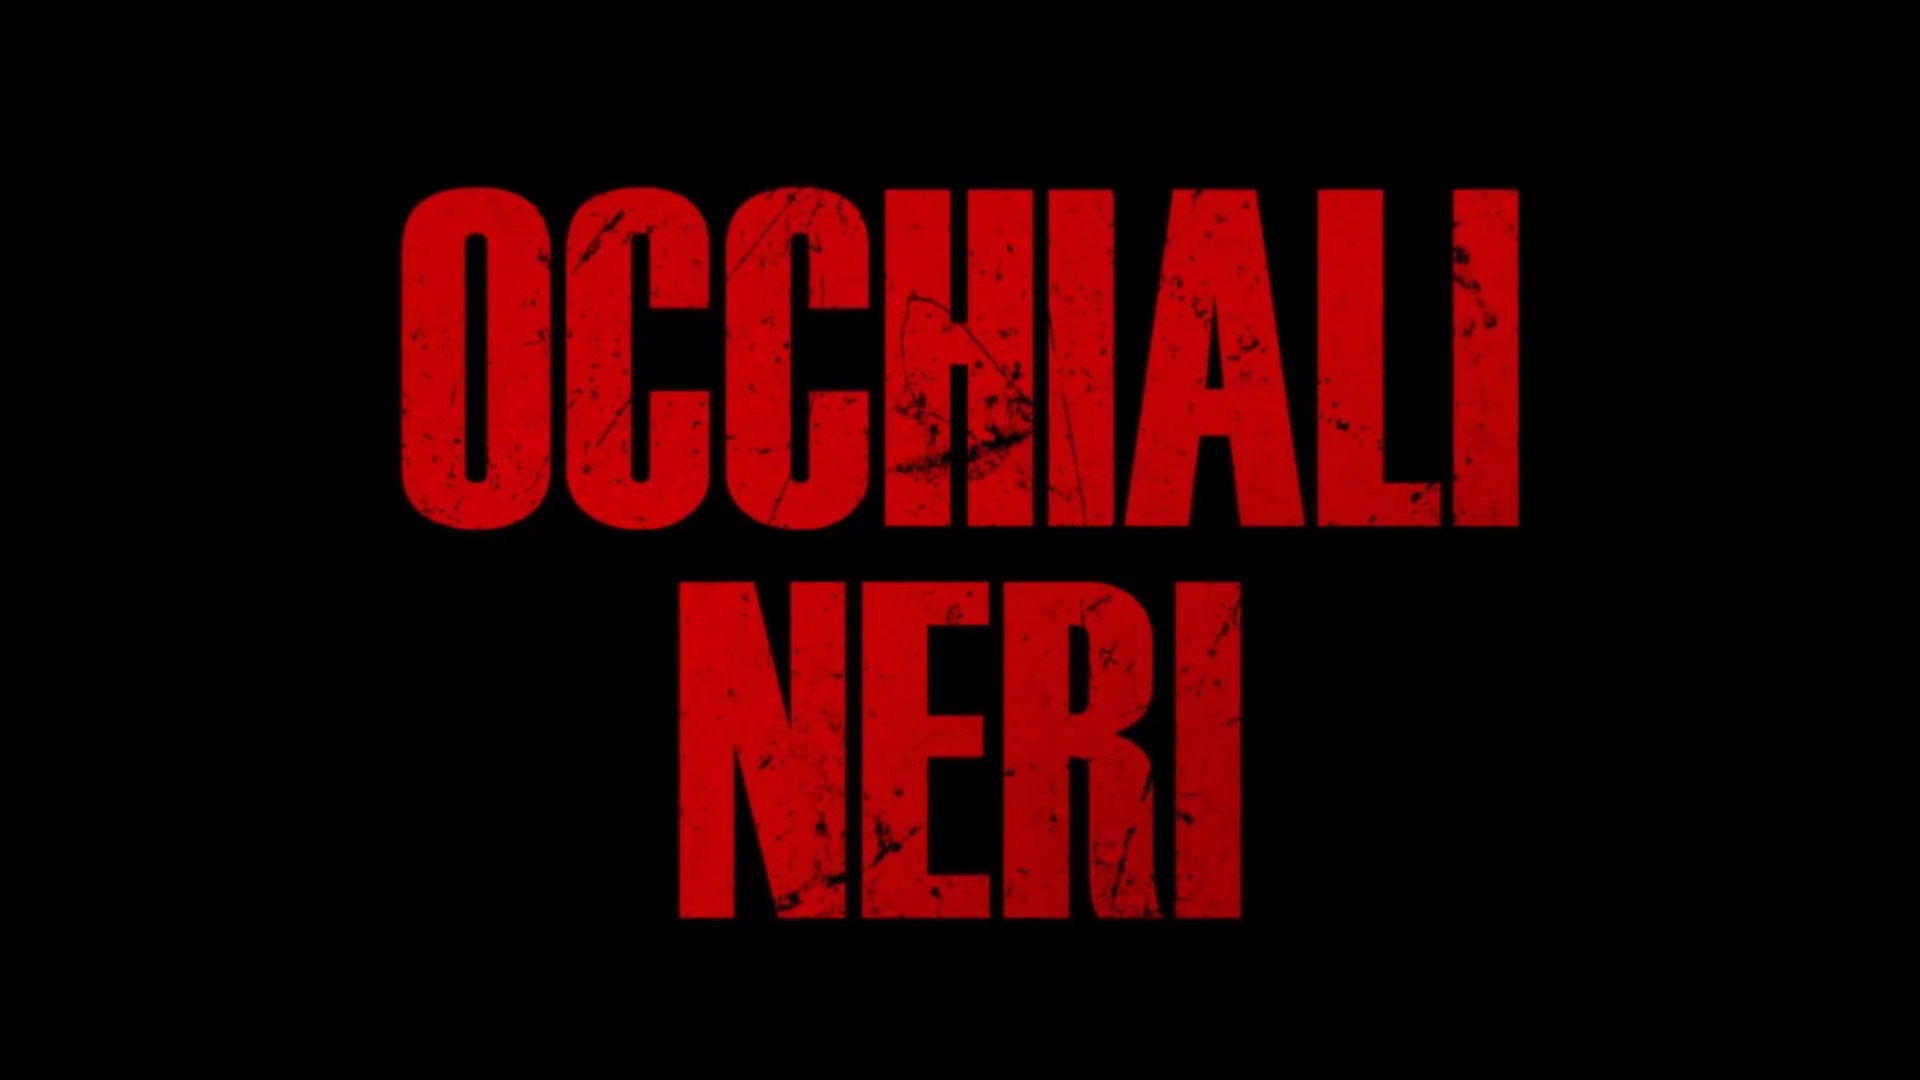 Occhiali Neri, teaser film di Dario Argento